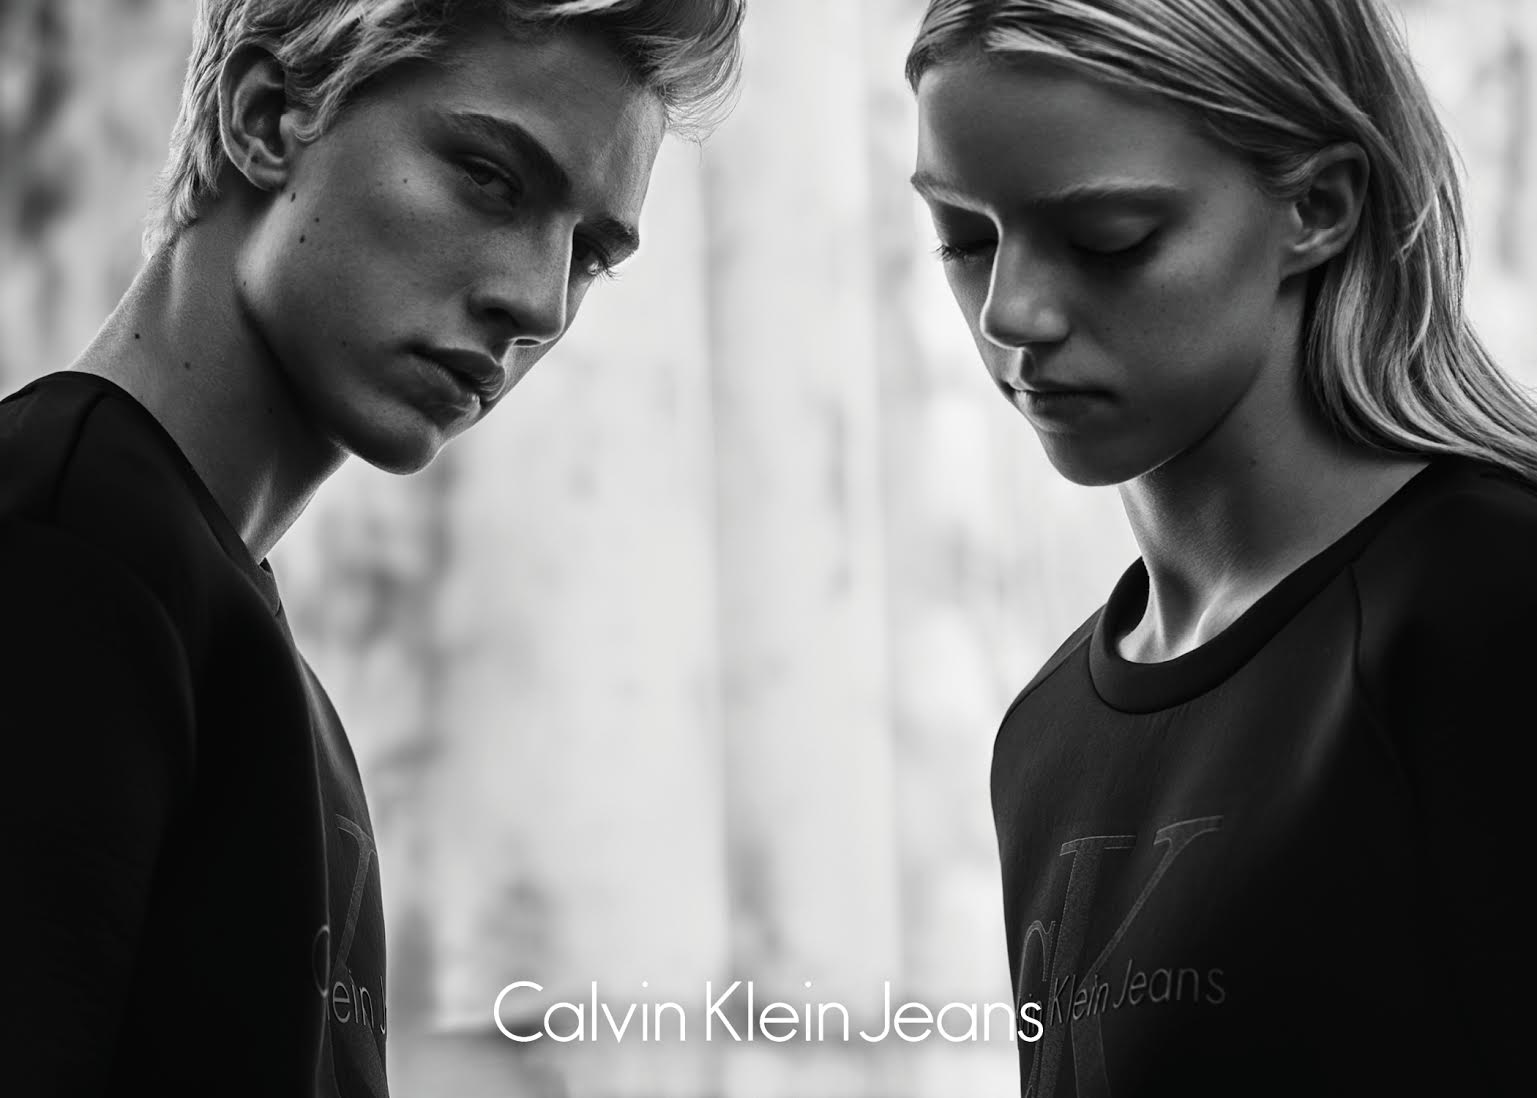 Calvin Klein Jeans Announces Launch of Black Series Limited Edition